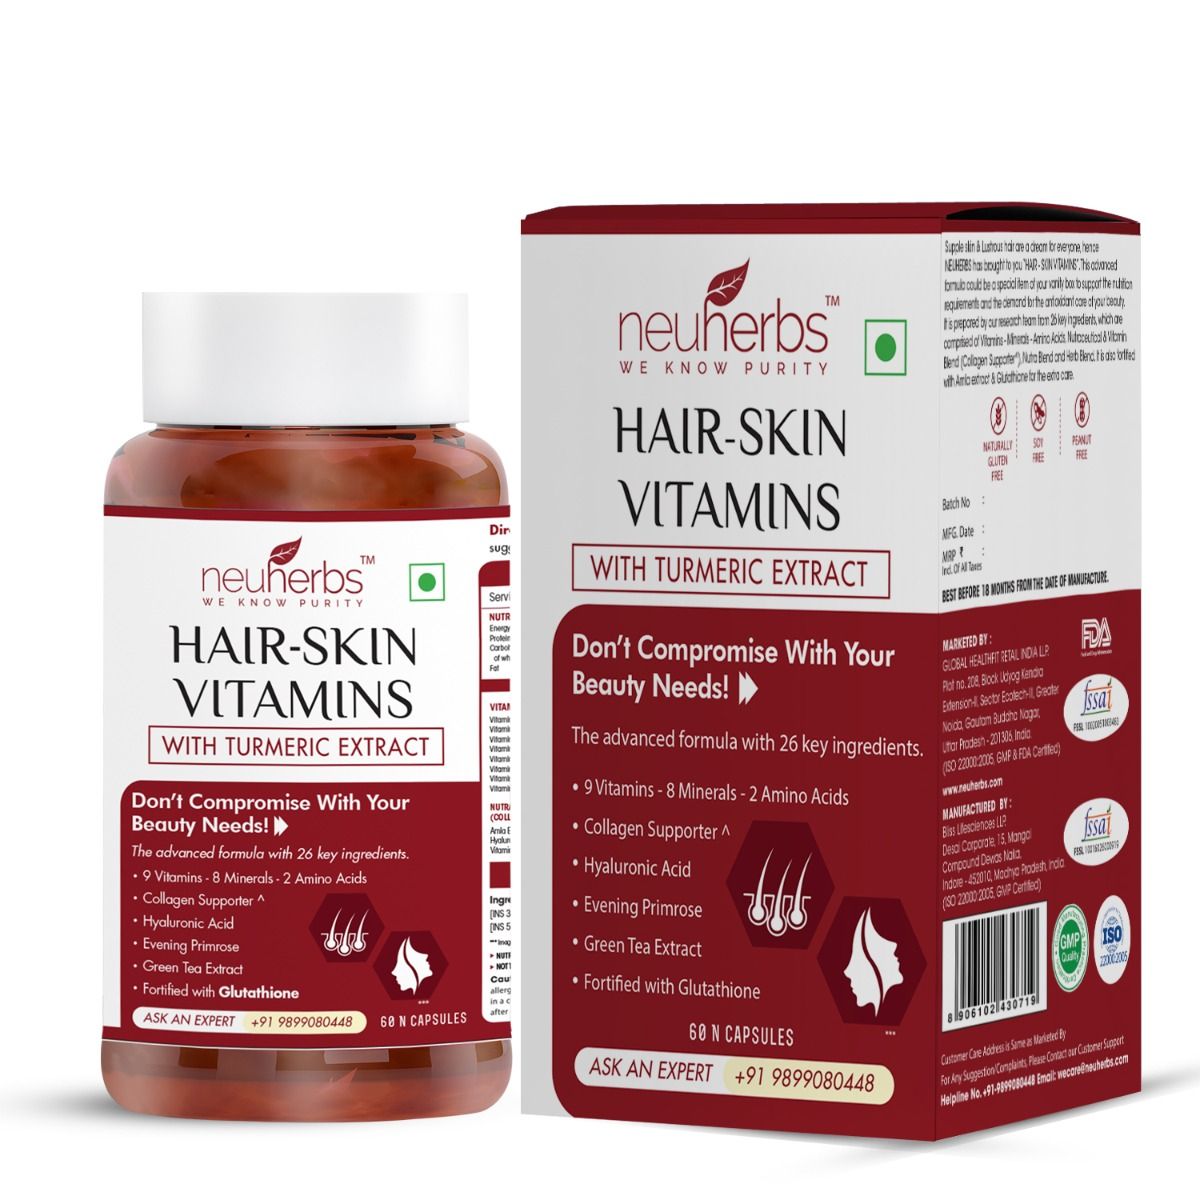 Neuherbs Hair-Skin Vitamins, 60 Capsules Price, Uses, Side Effects,  Composition - Apollo Pharmacy